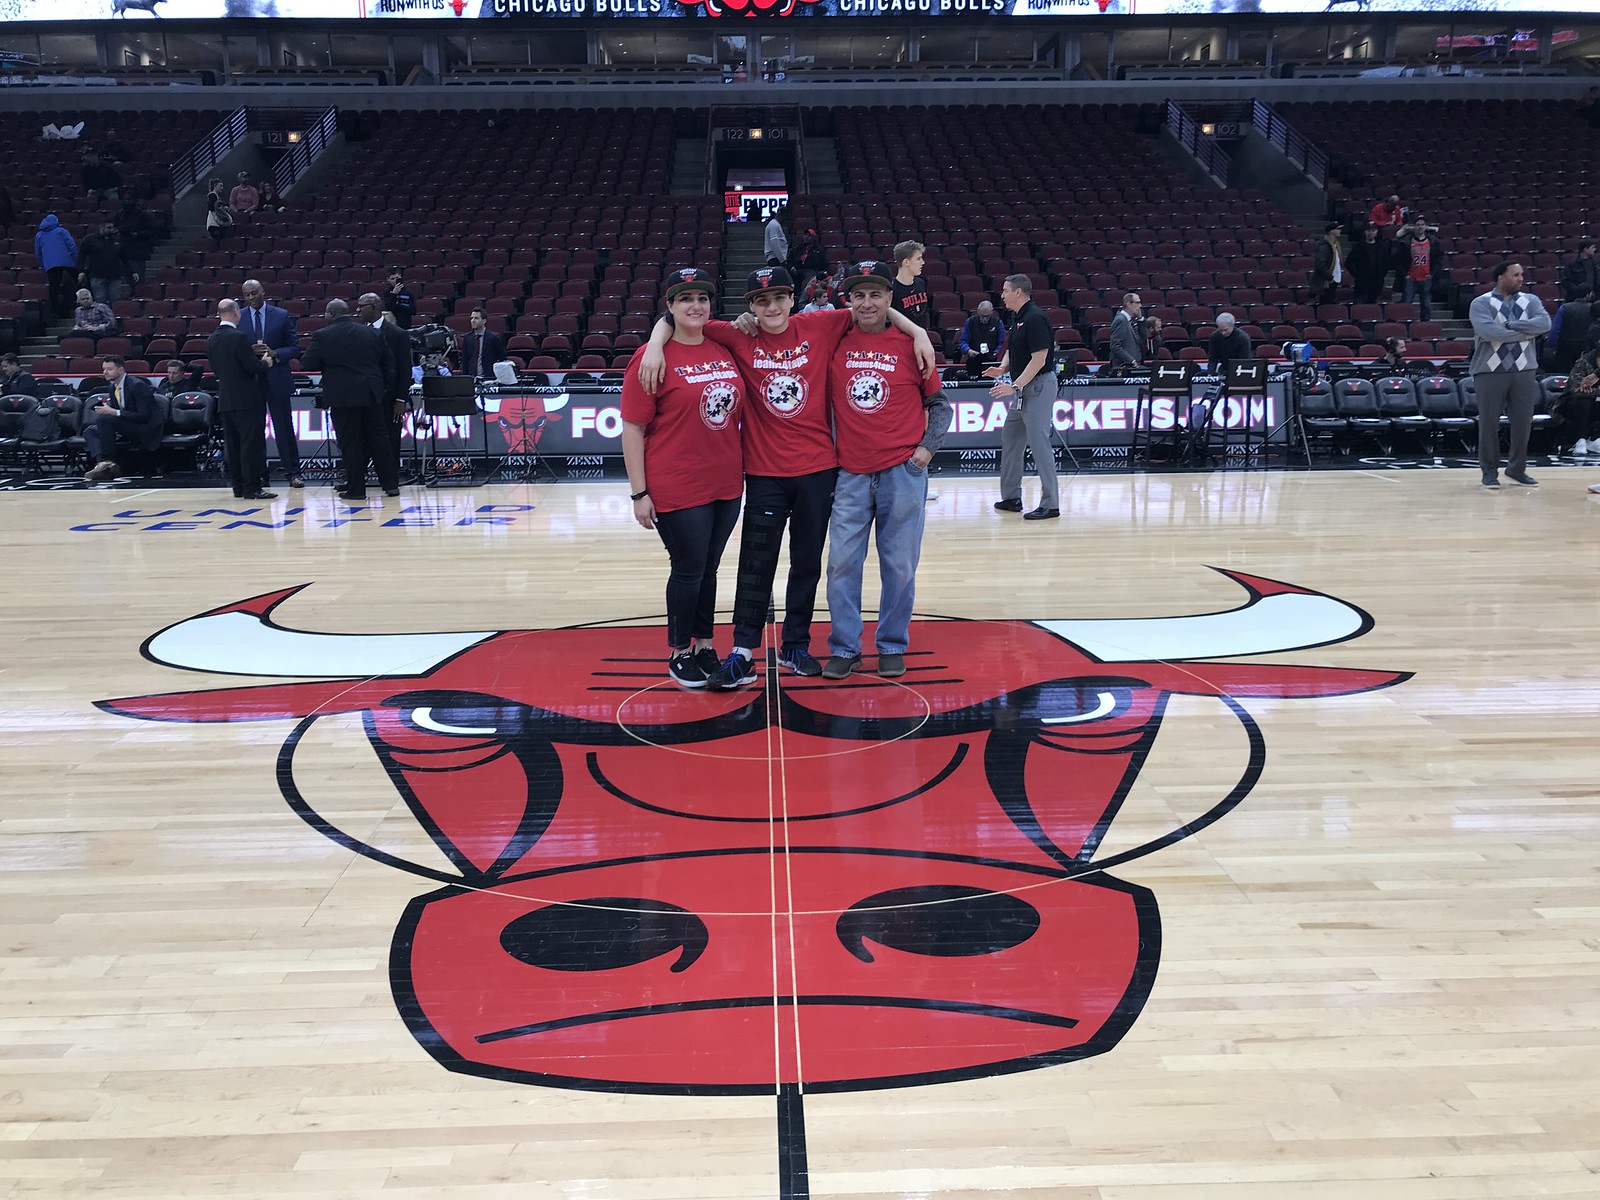 2018_T4T_Chicago Bulls Game 14